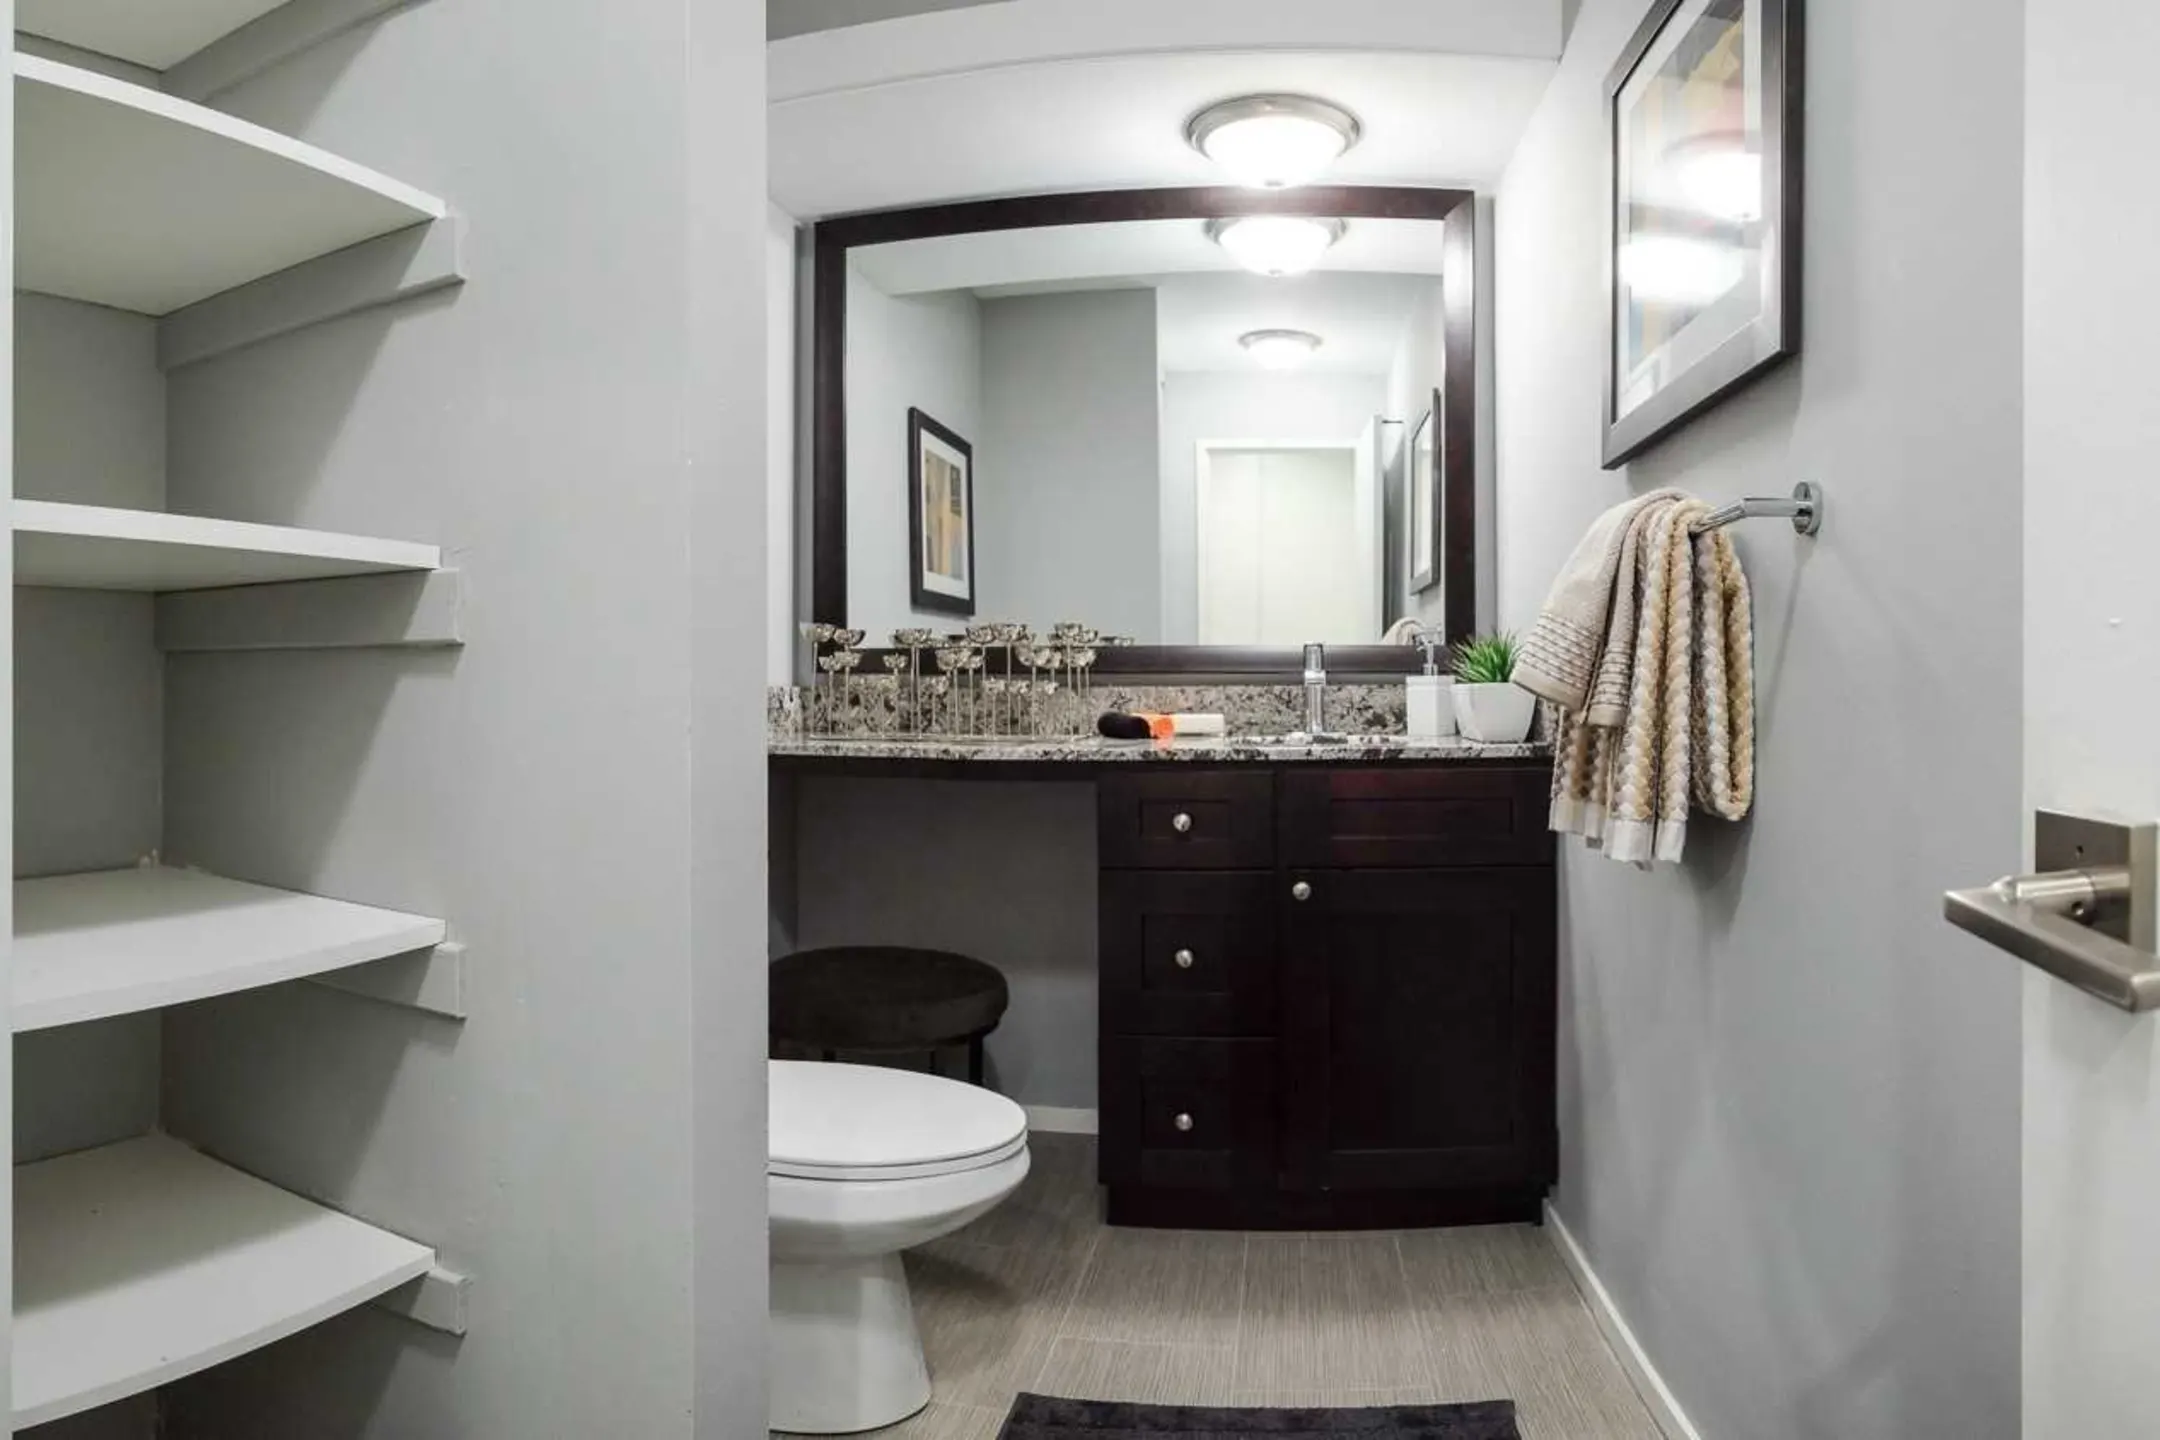 Bathroom - Merriam Park Apartments - Saint Paul, MN